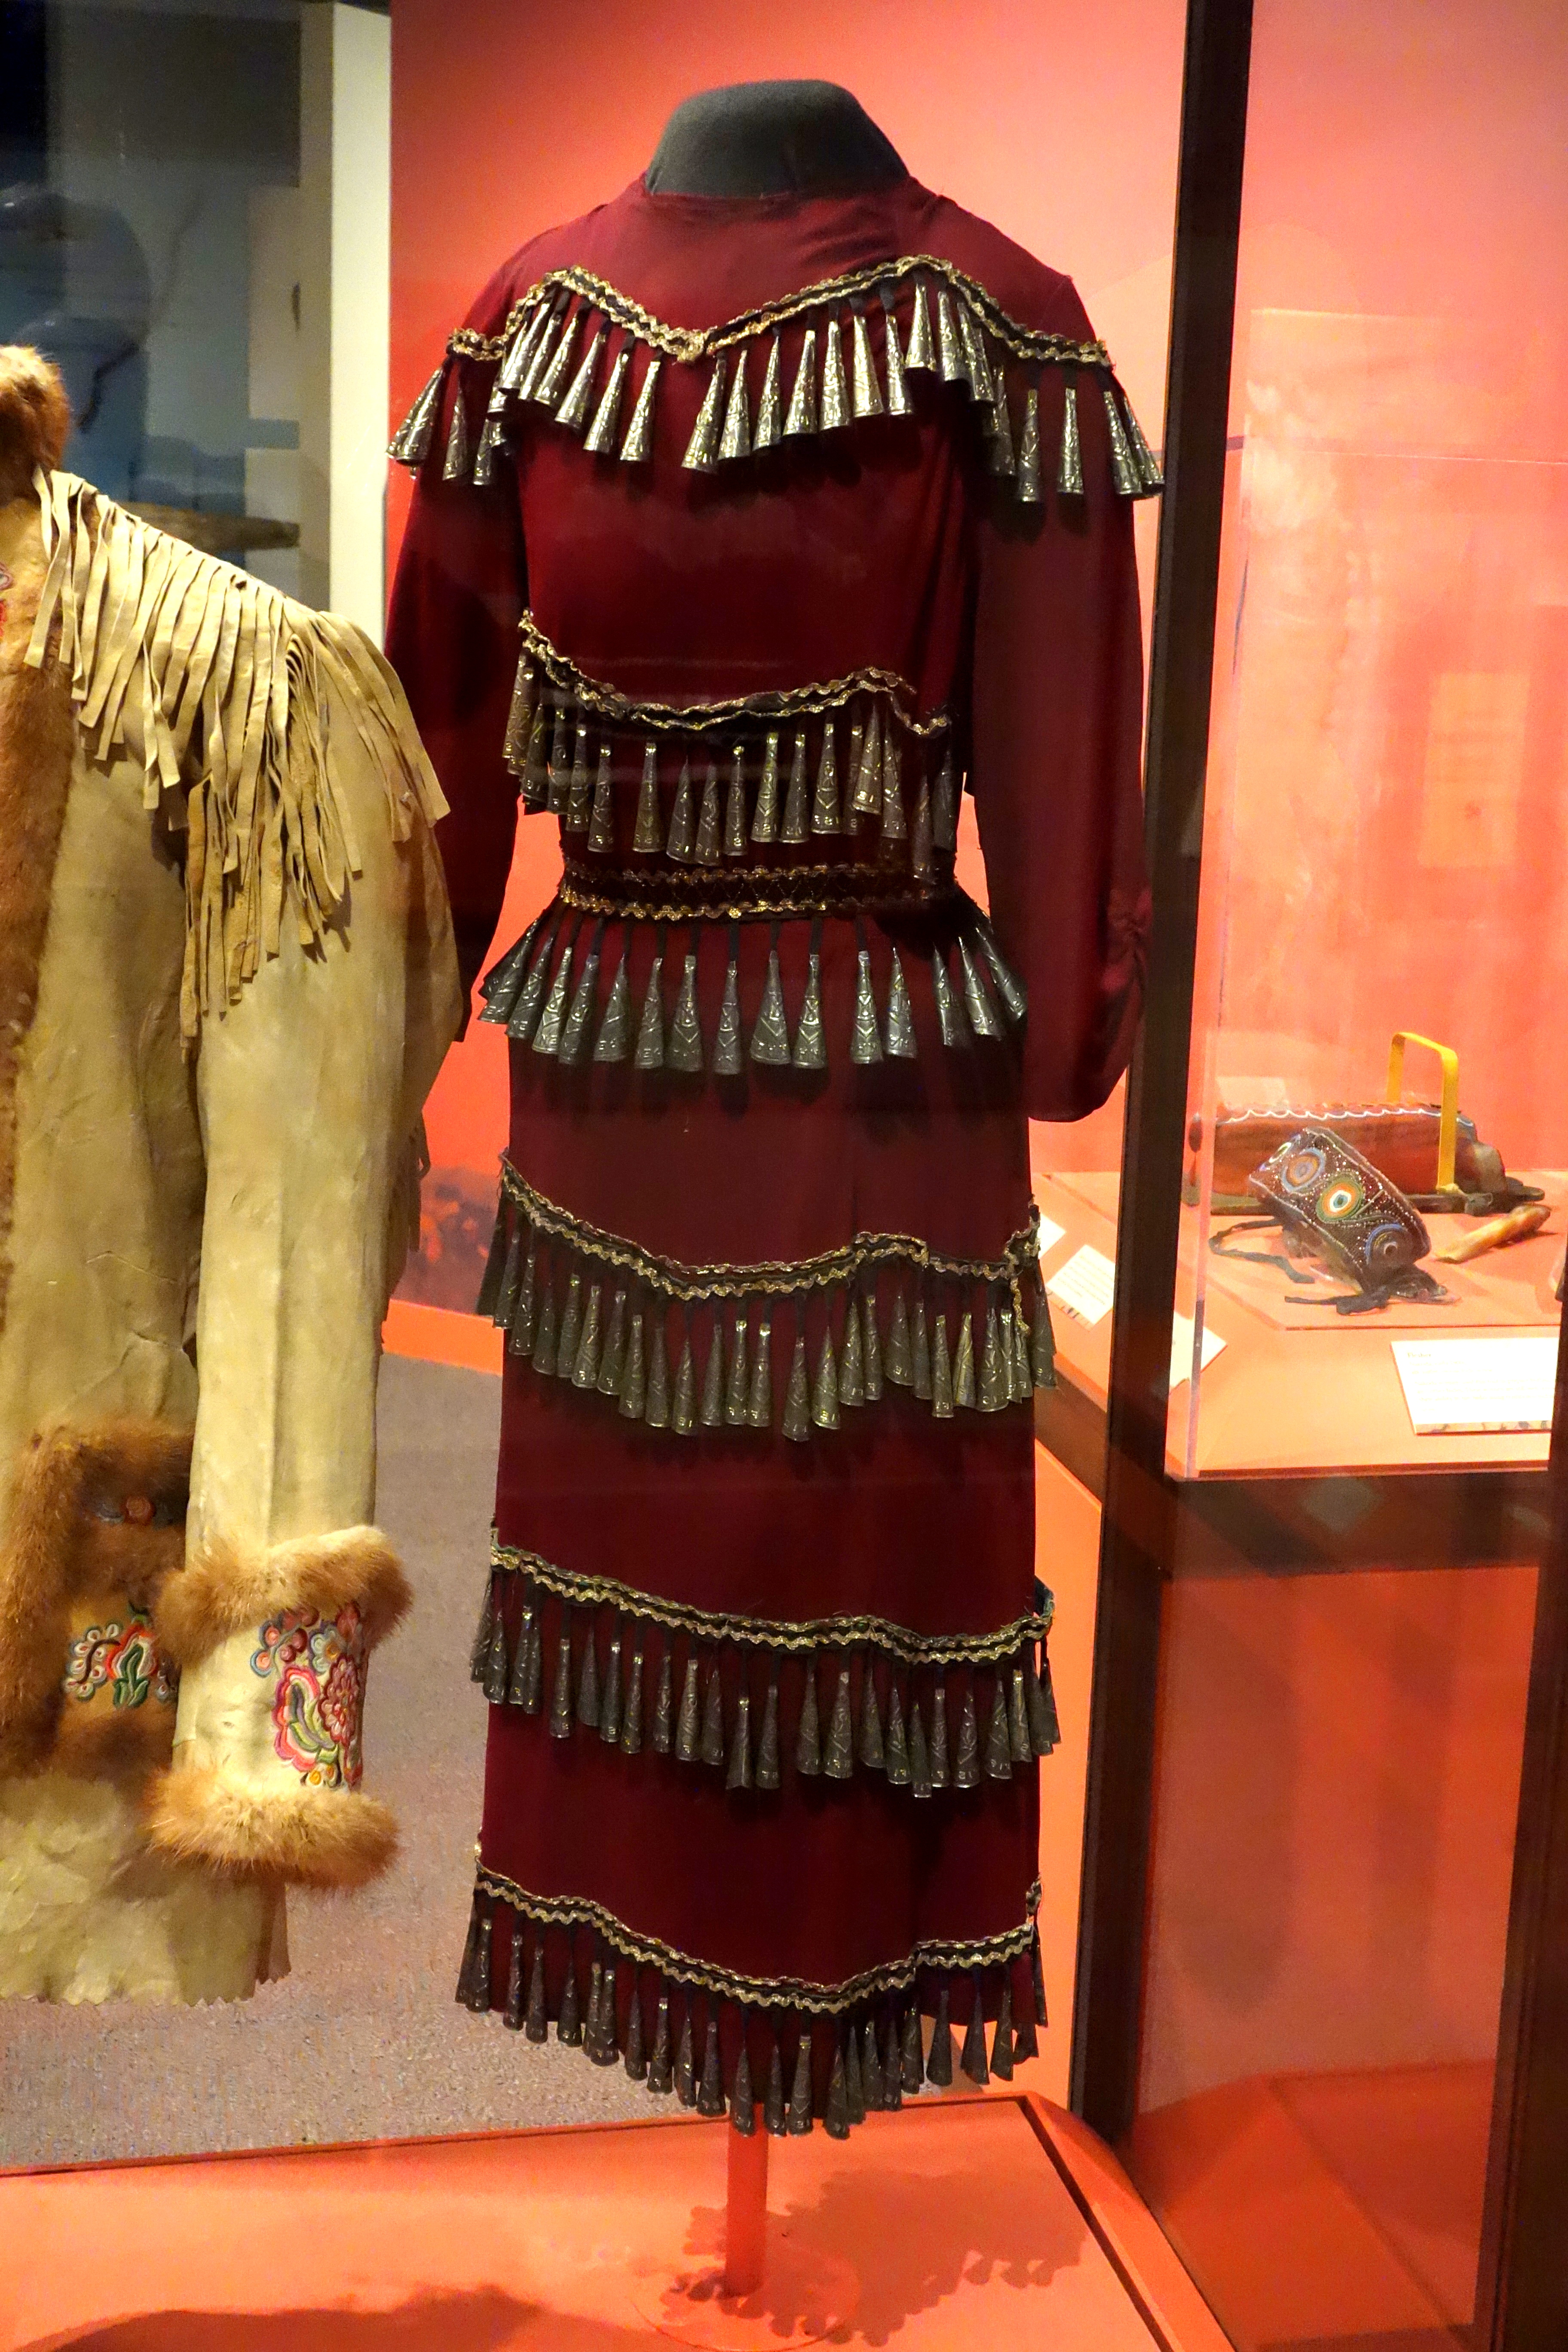 A jingle dress from the Day Star First Nation, Saskatchewan - circa 1950.